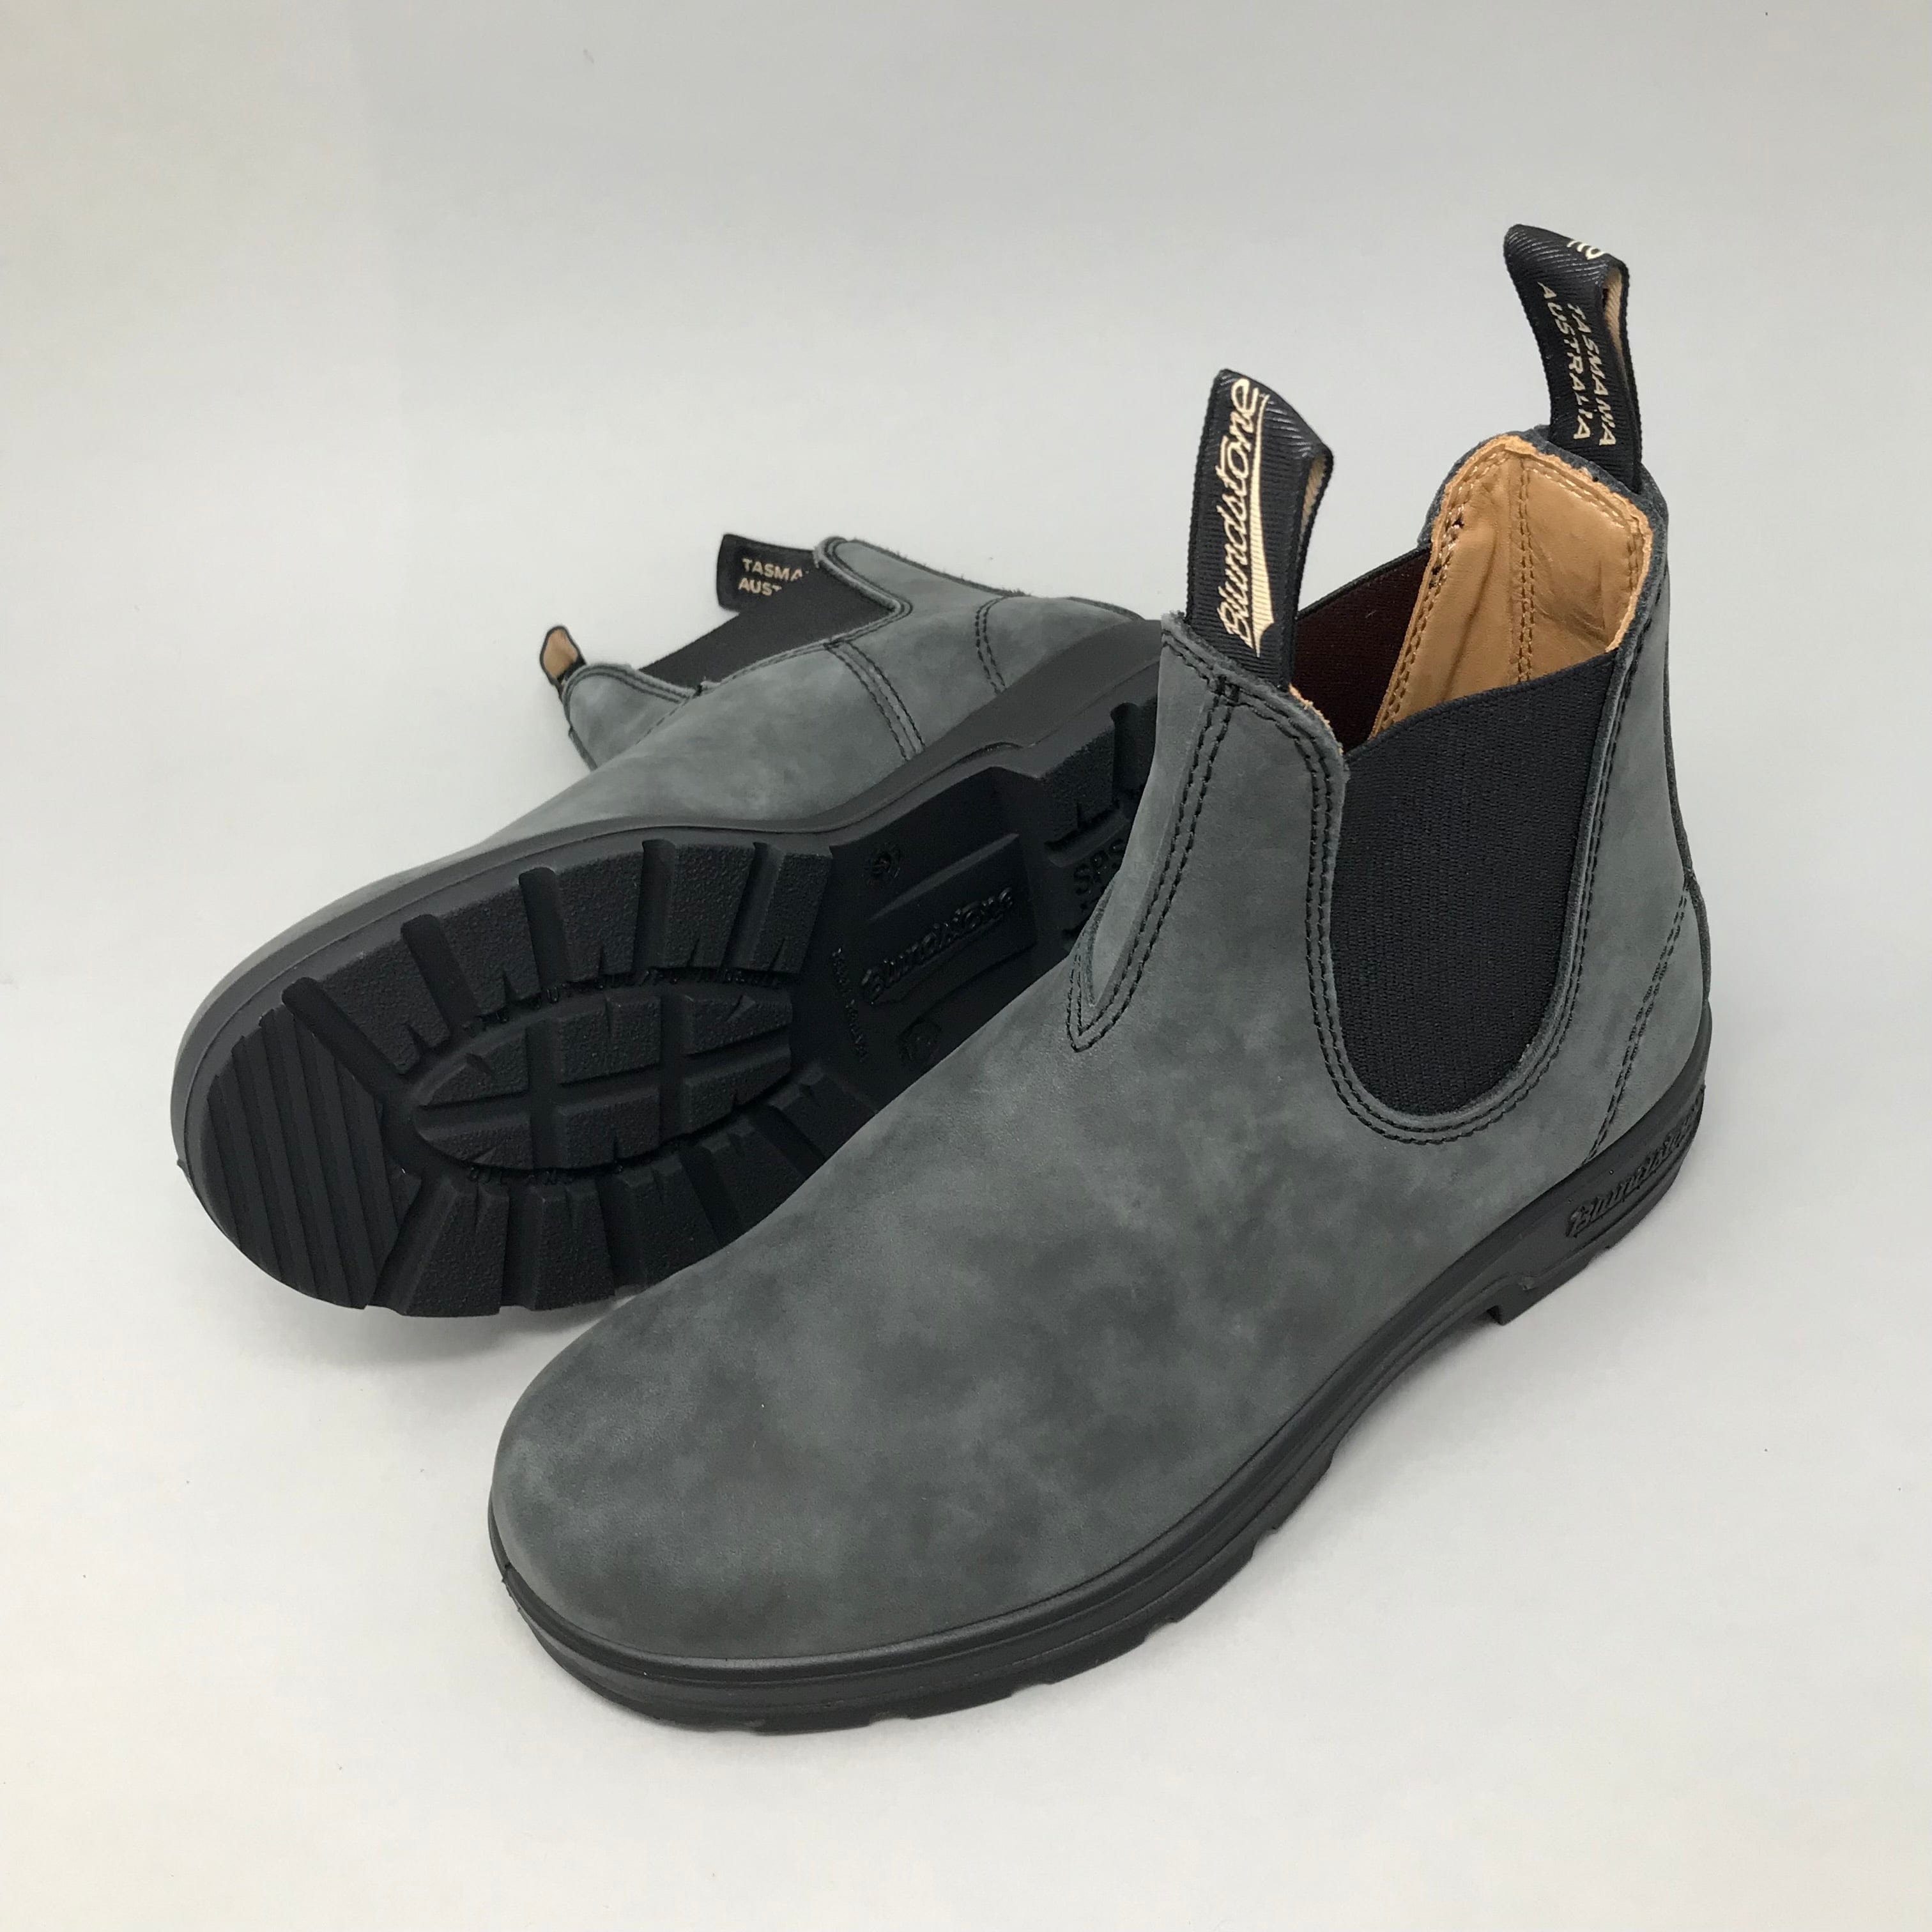 Blundstone 587 in Rustic Black BOOTS  - ZIGZAG Footwear